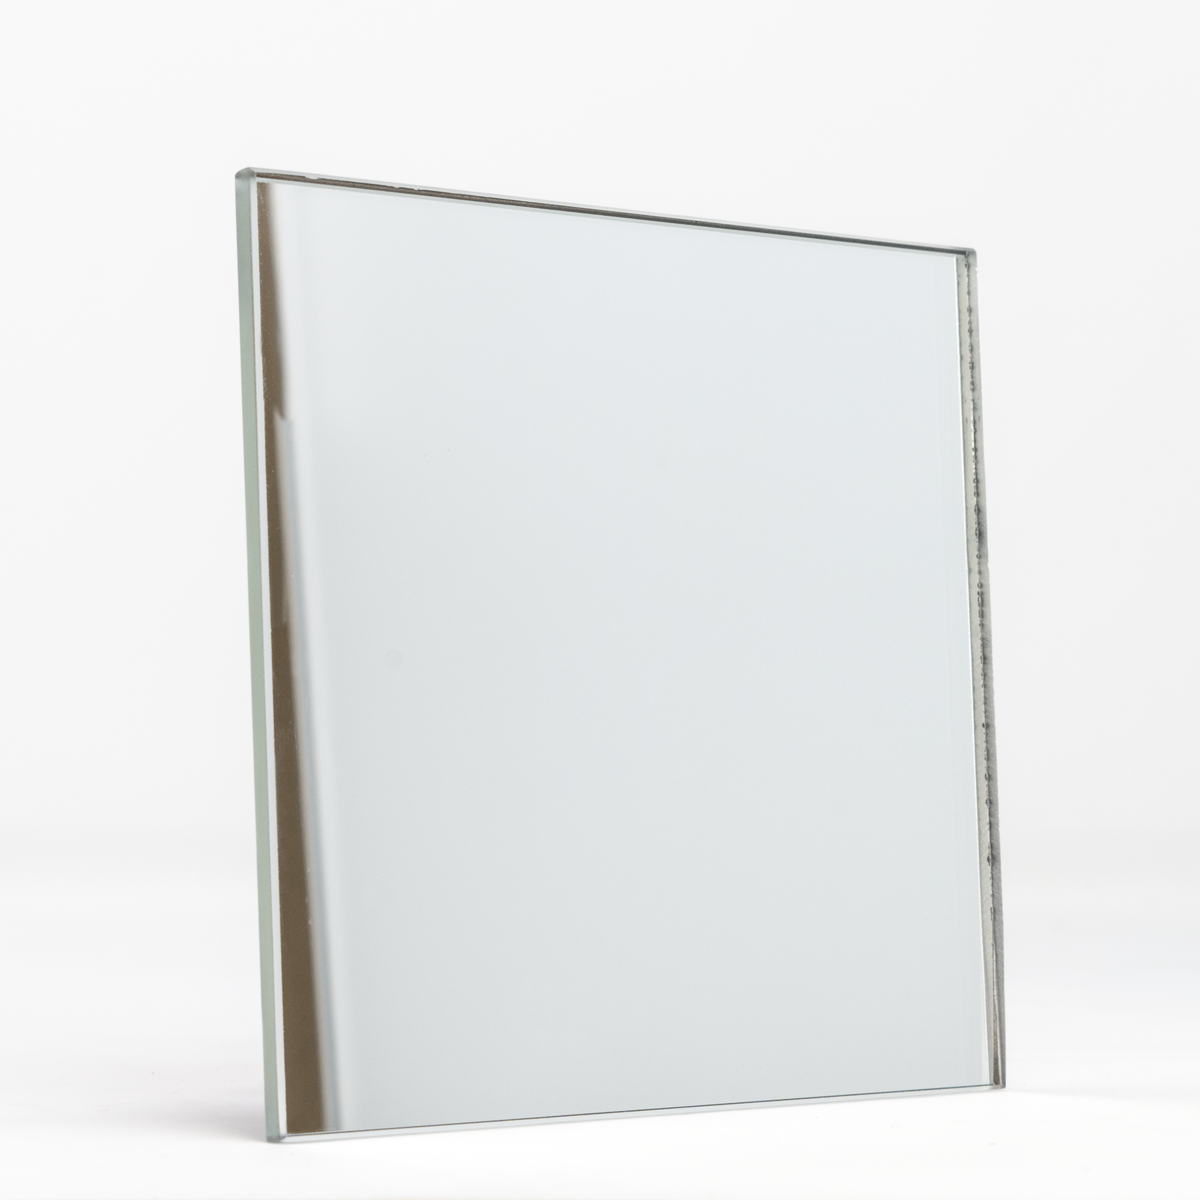 Low Iron Mirror Premium Glass Insert Sample